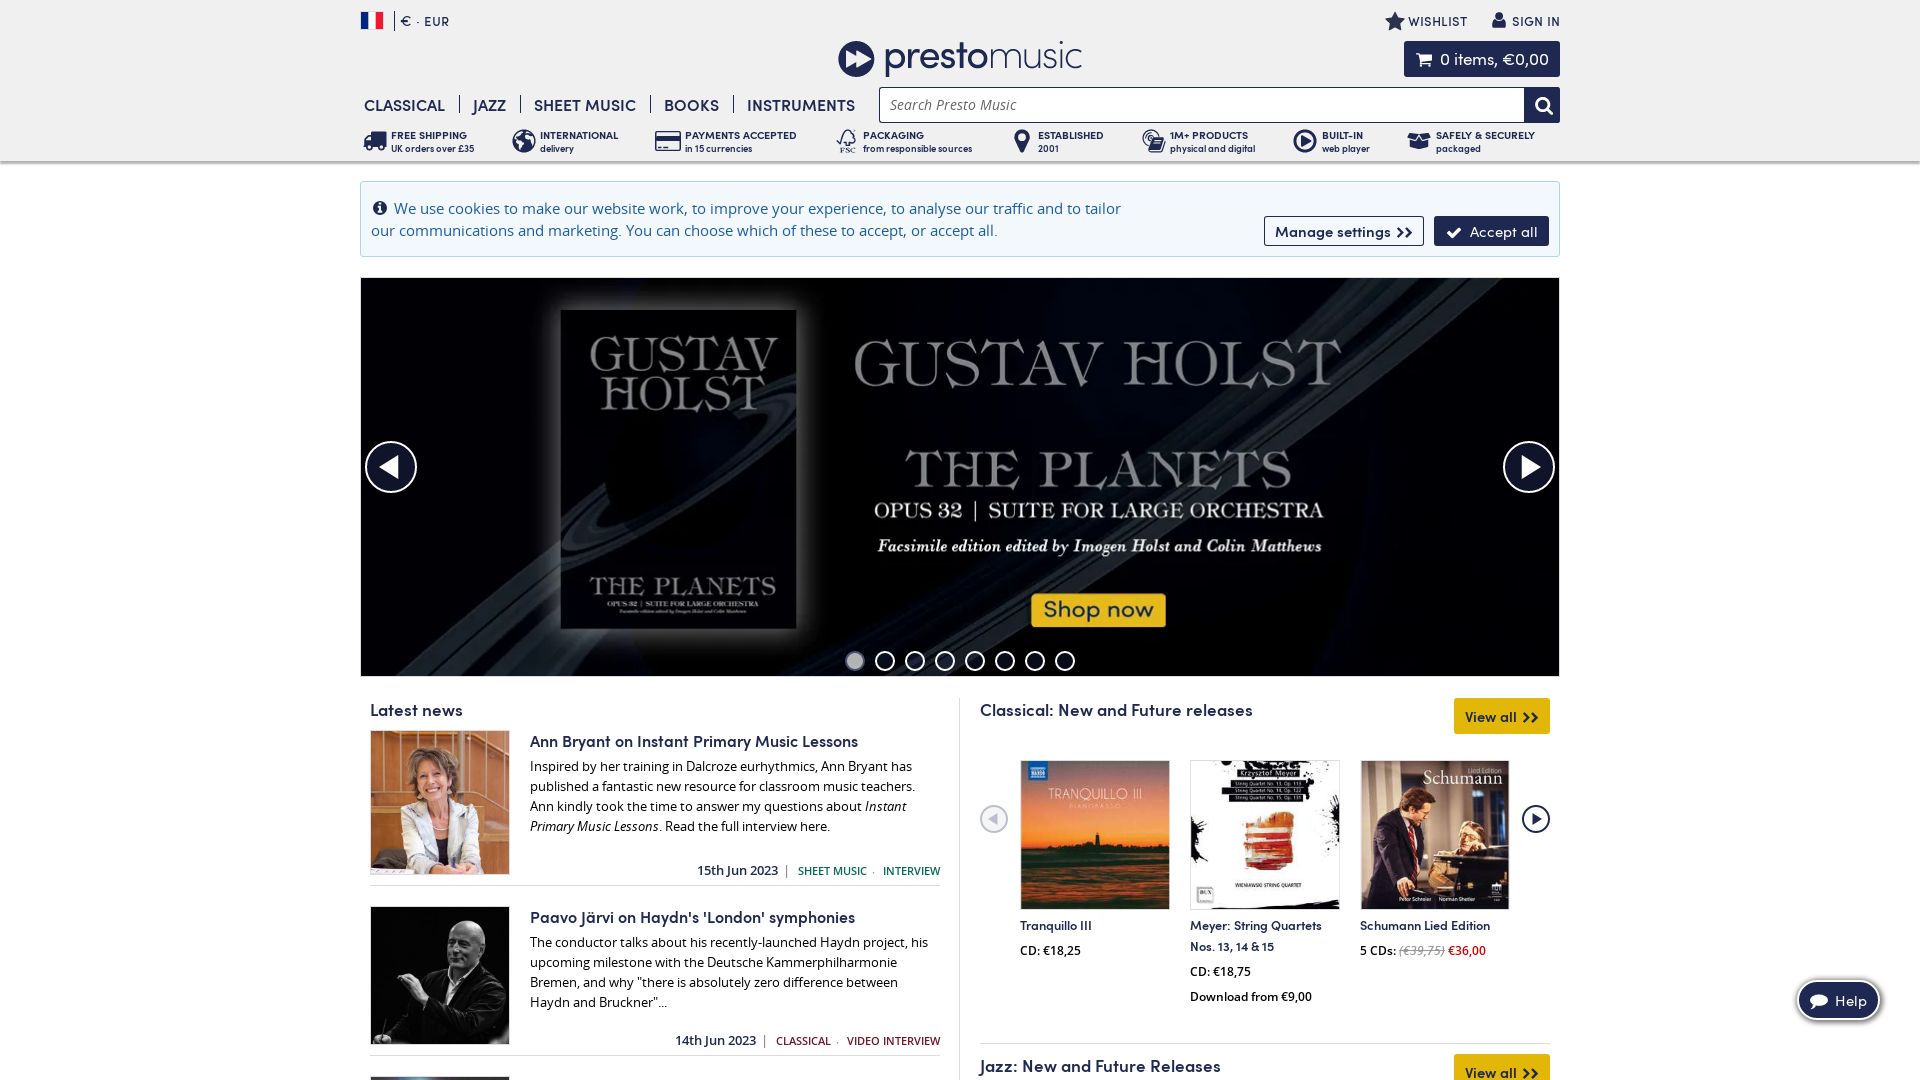 Website status prestomusic.com is   ONLINE